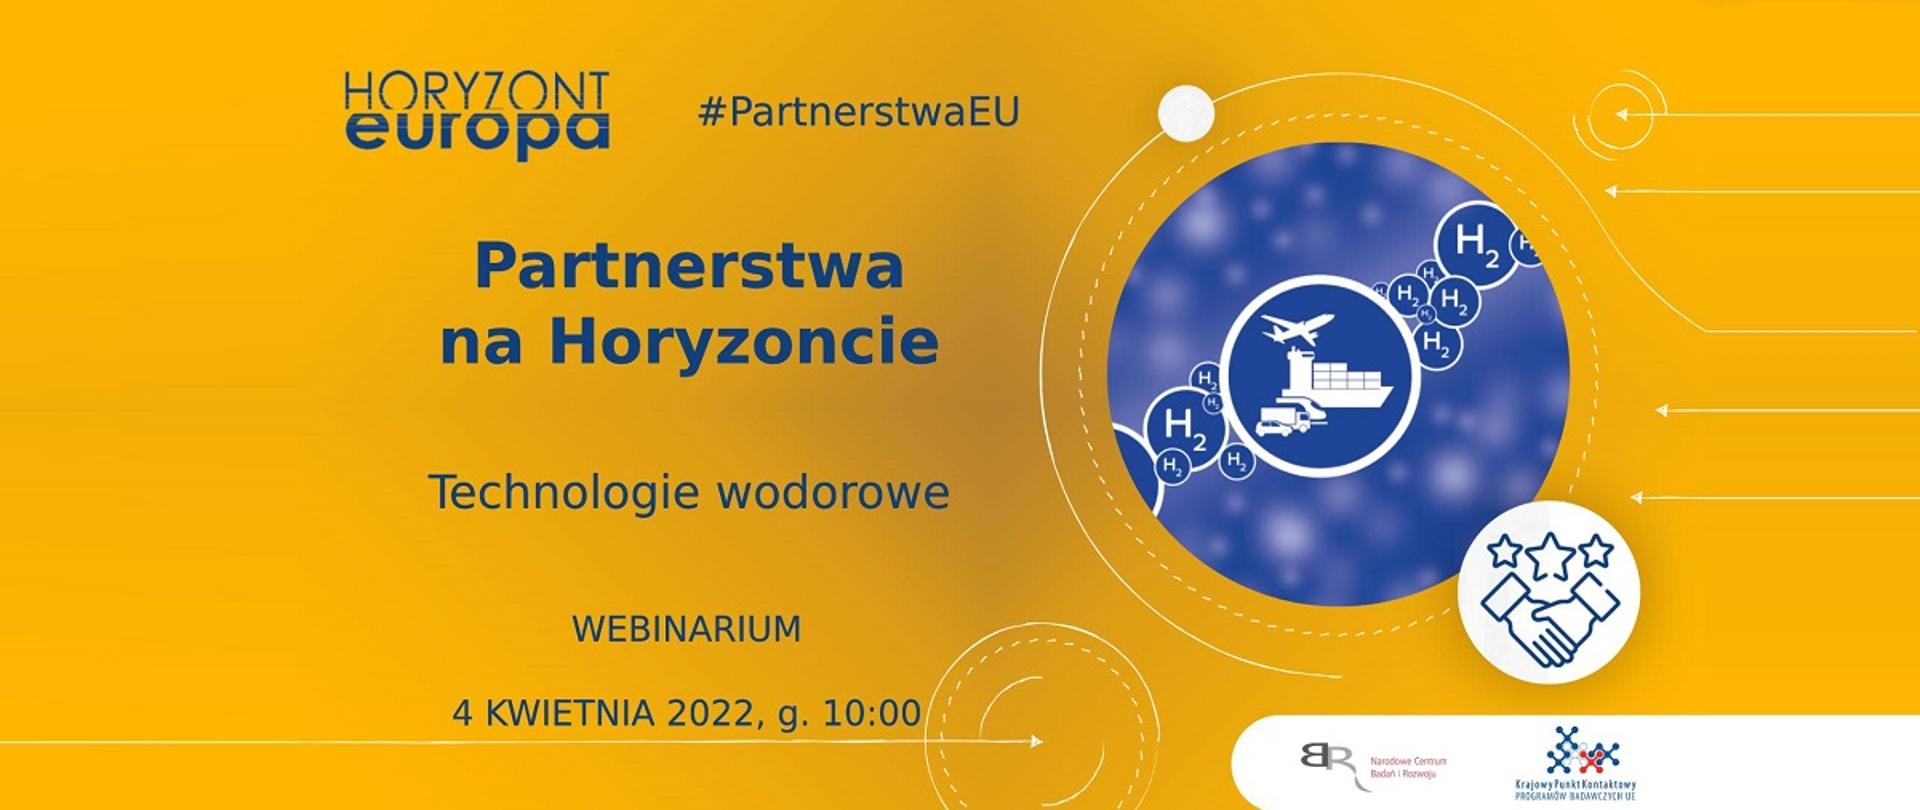 Horyzont Europa
#PartnerstwaEU
Partnerstwa na Horyzoncie
Technologie wodorowe
Webinarium 4 kwietnia 2022, g. 10:00